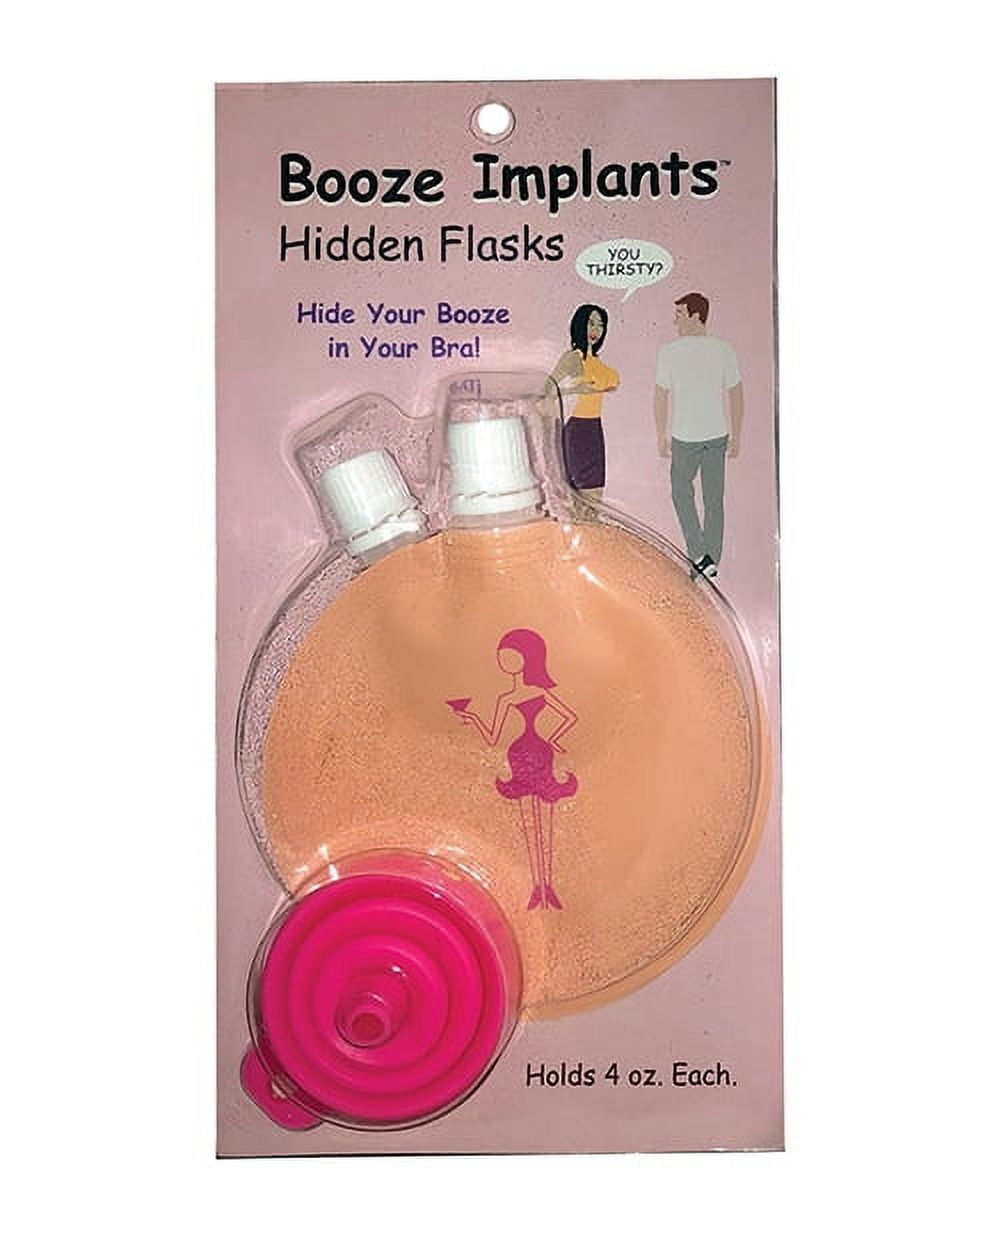 Implant Flasks